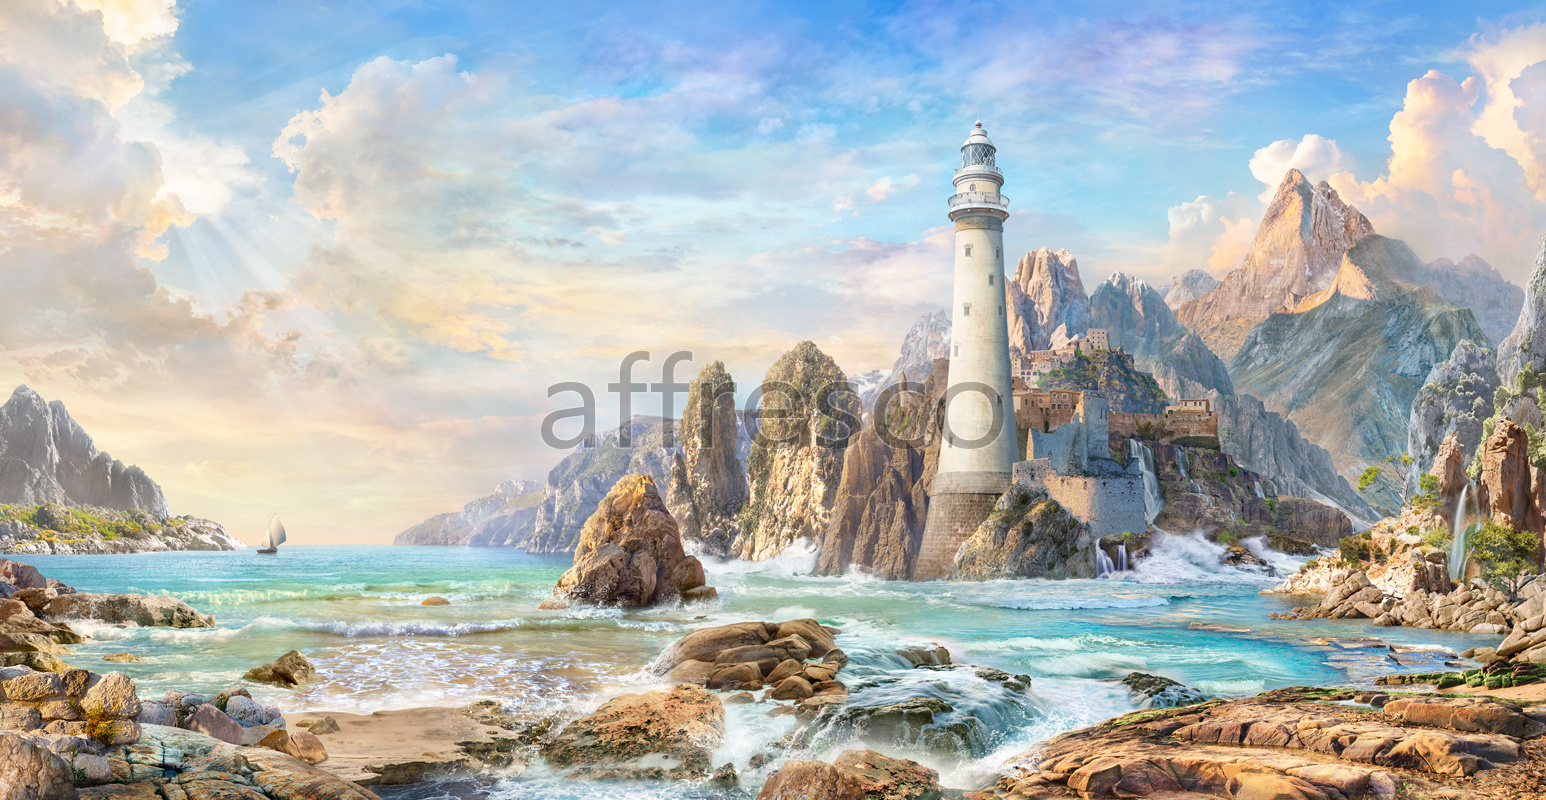 6551 | The best landscapes | Marine lighthouse | Affresco Factory